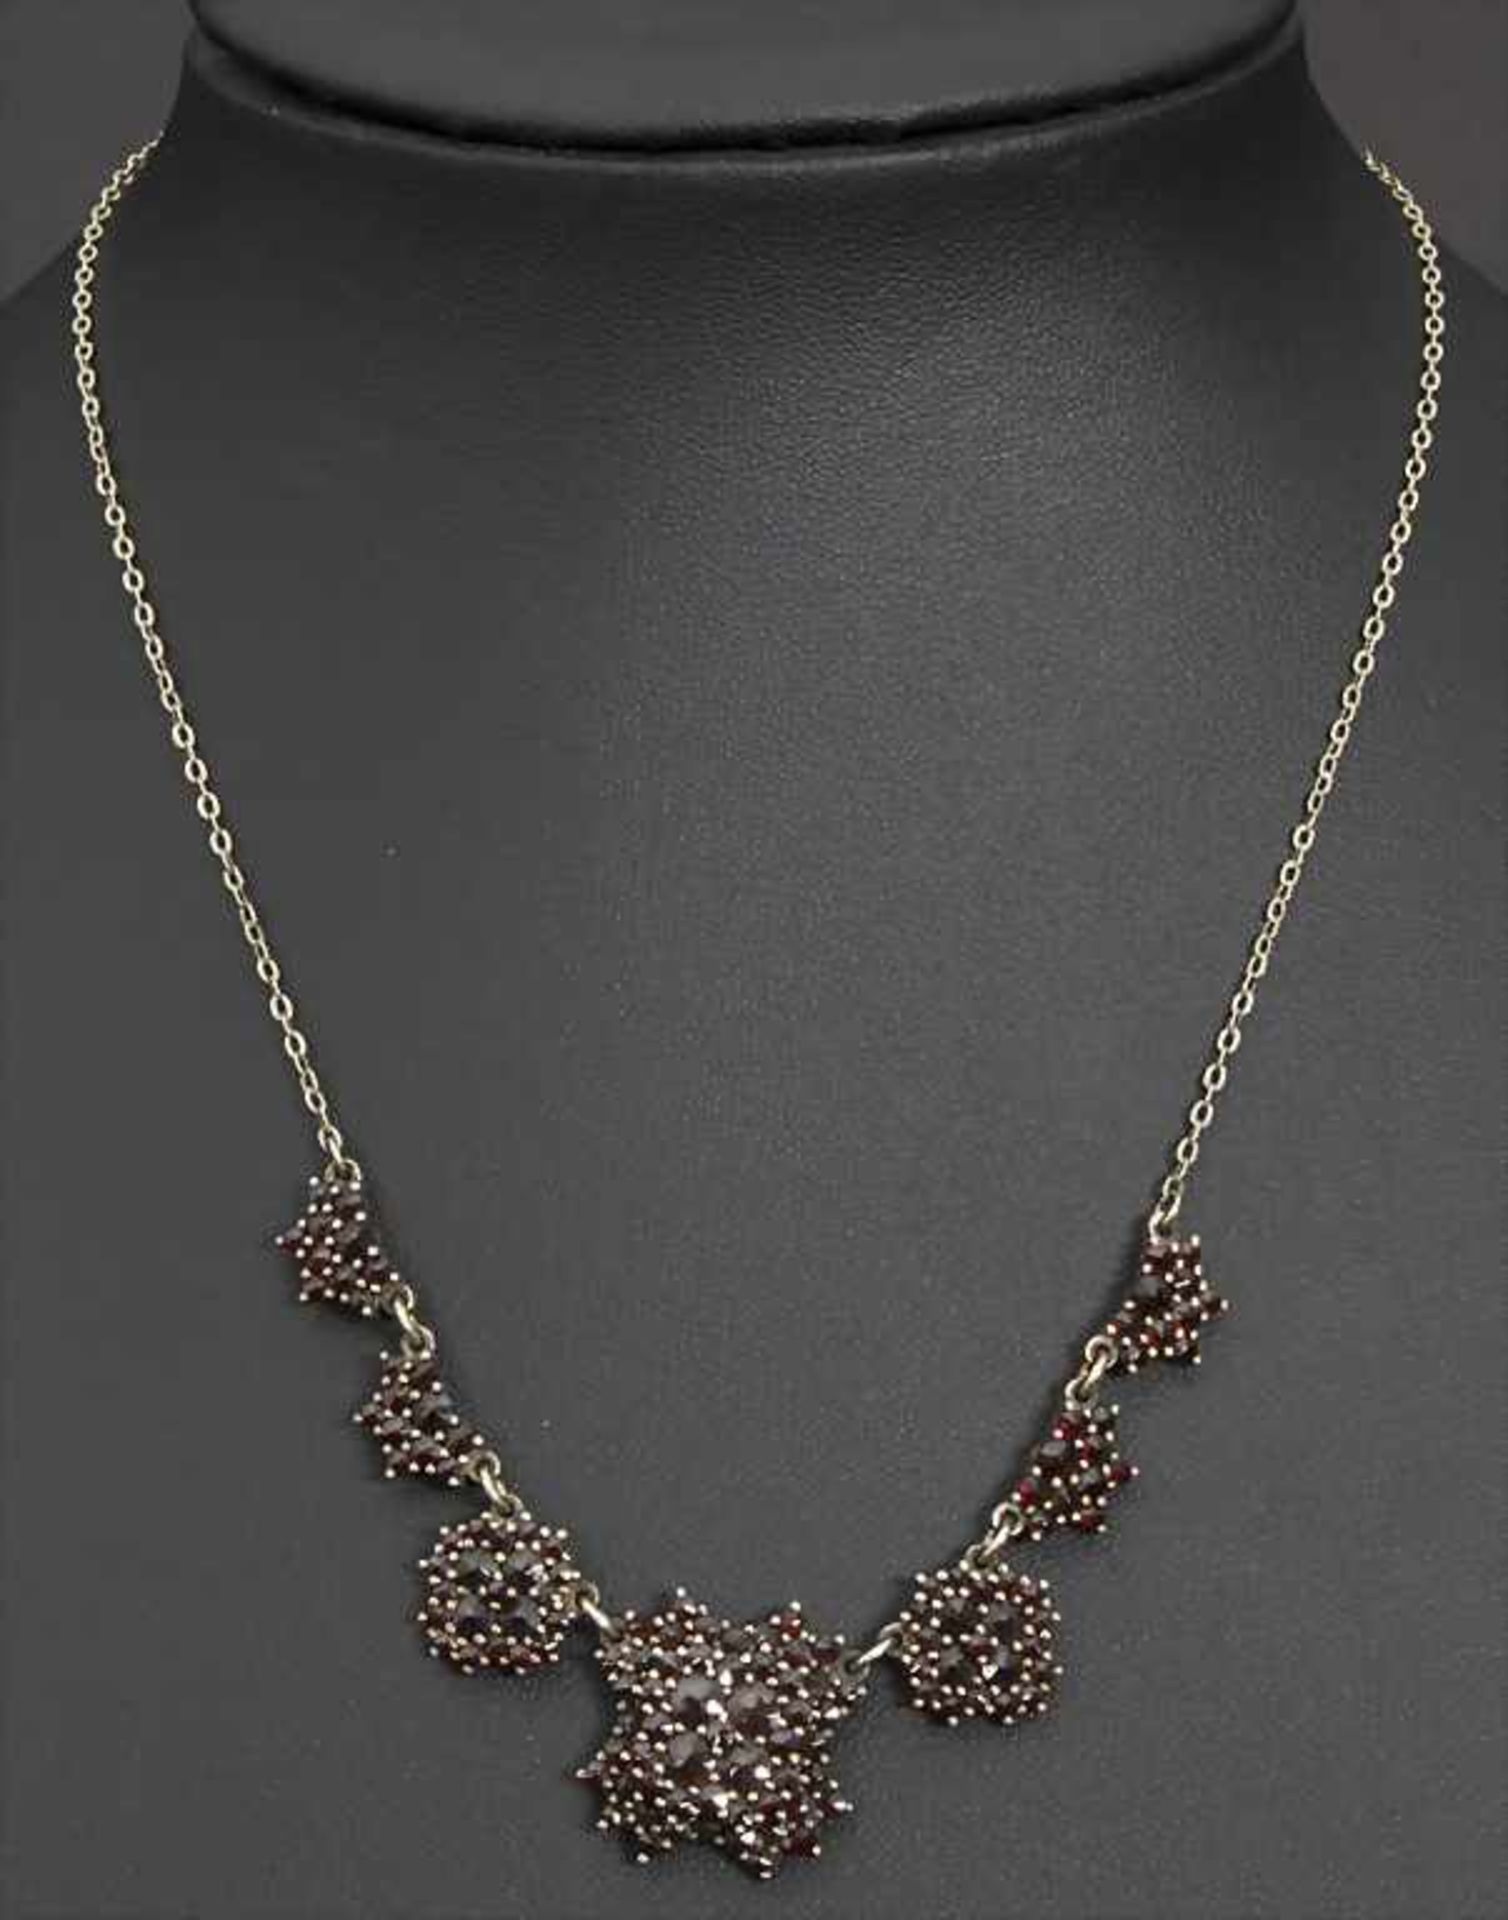 Granat-Collier / A garnet necklace - Image 2 of 6